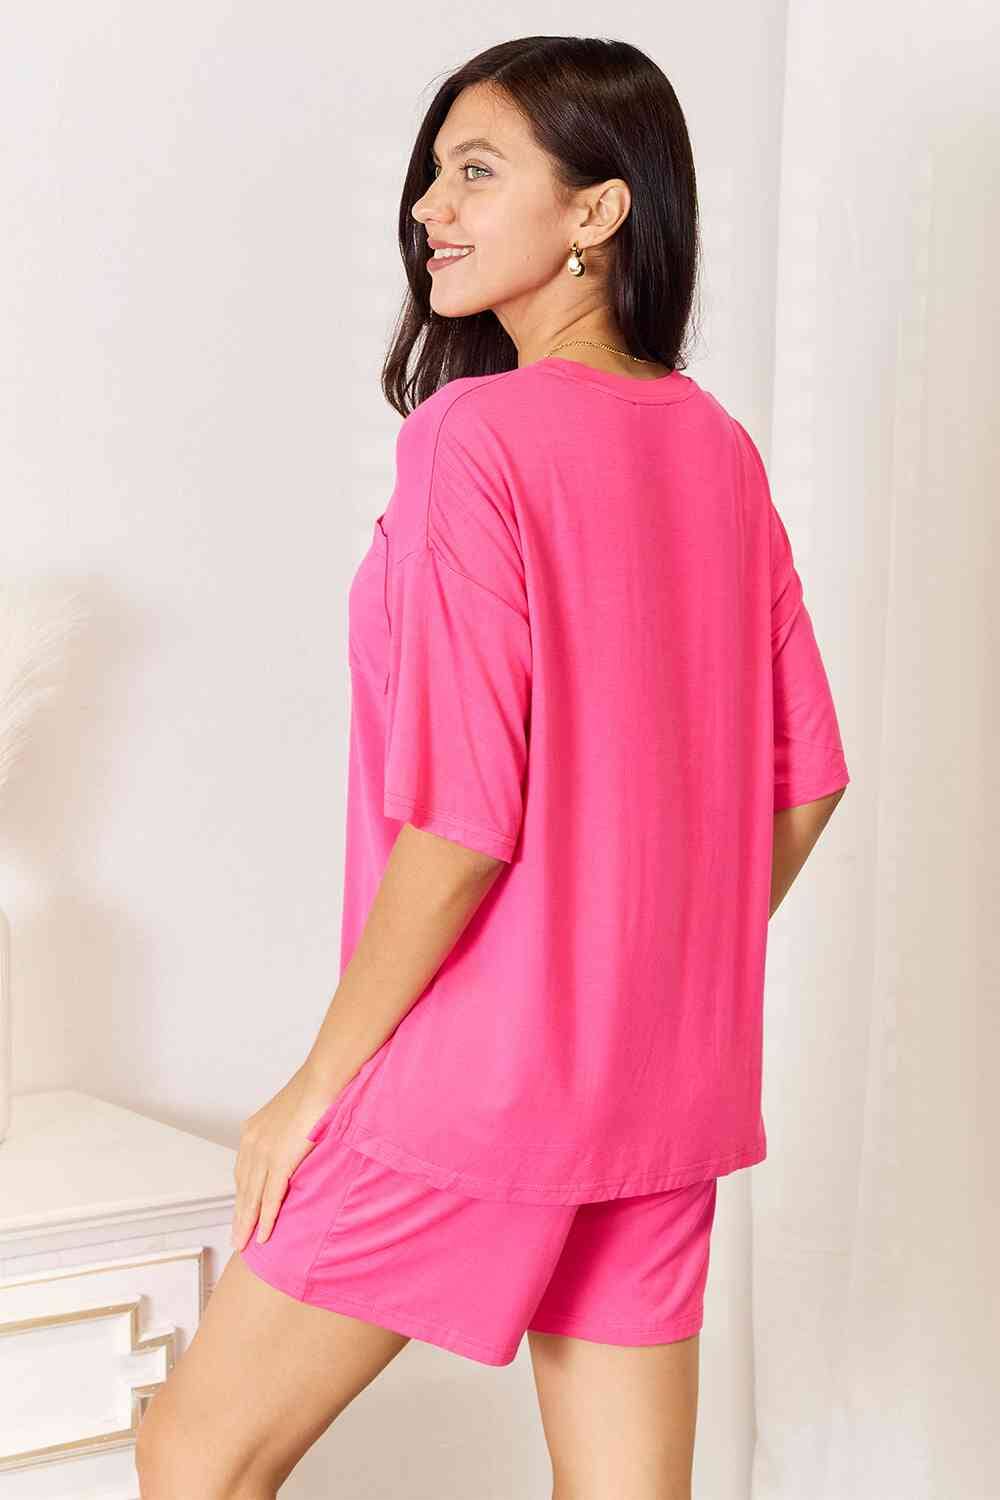 Basic Bae 2 piece Soft Rayon Stretchy Half Sleeve Top and Shorts Loungewear Set Sleepwear & Loungewear jehouze 